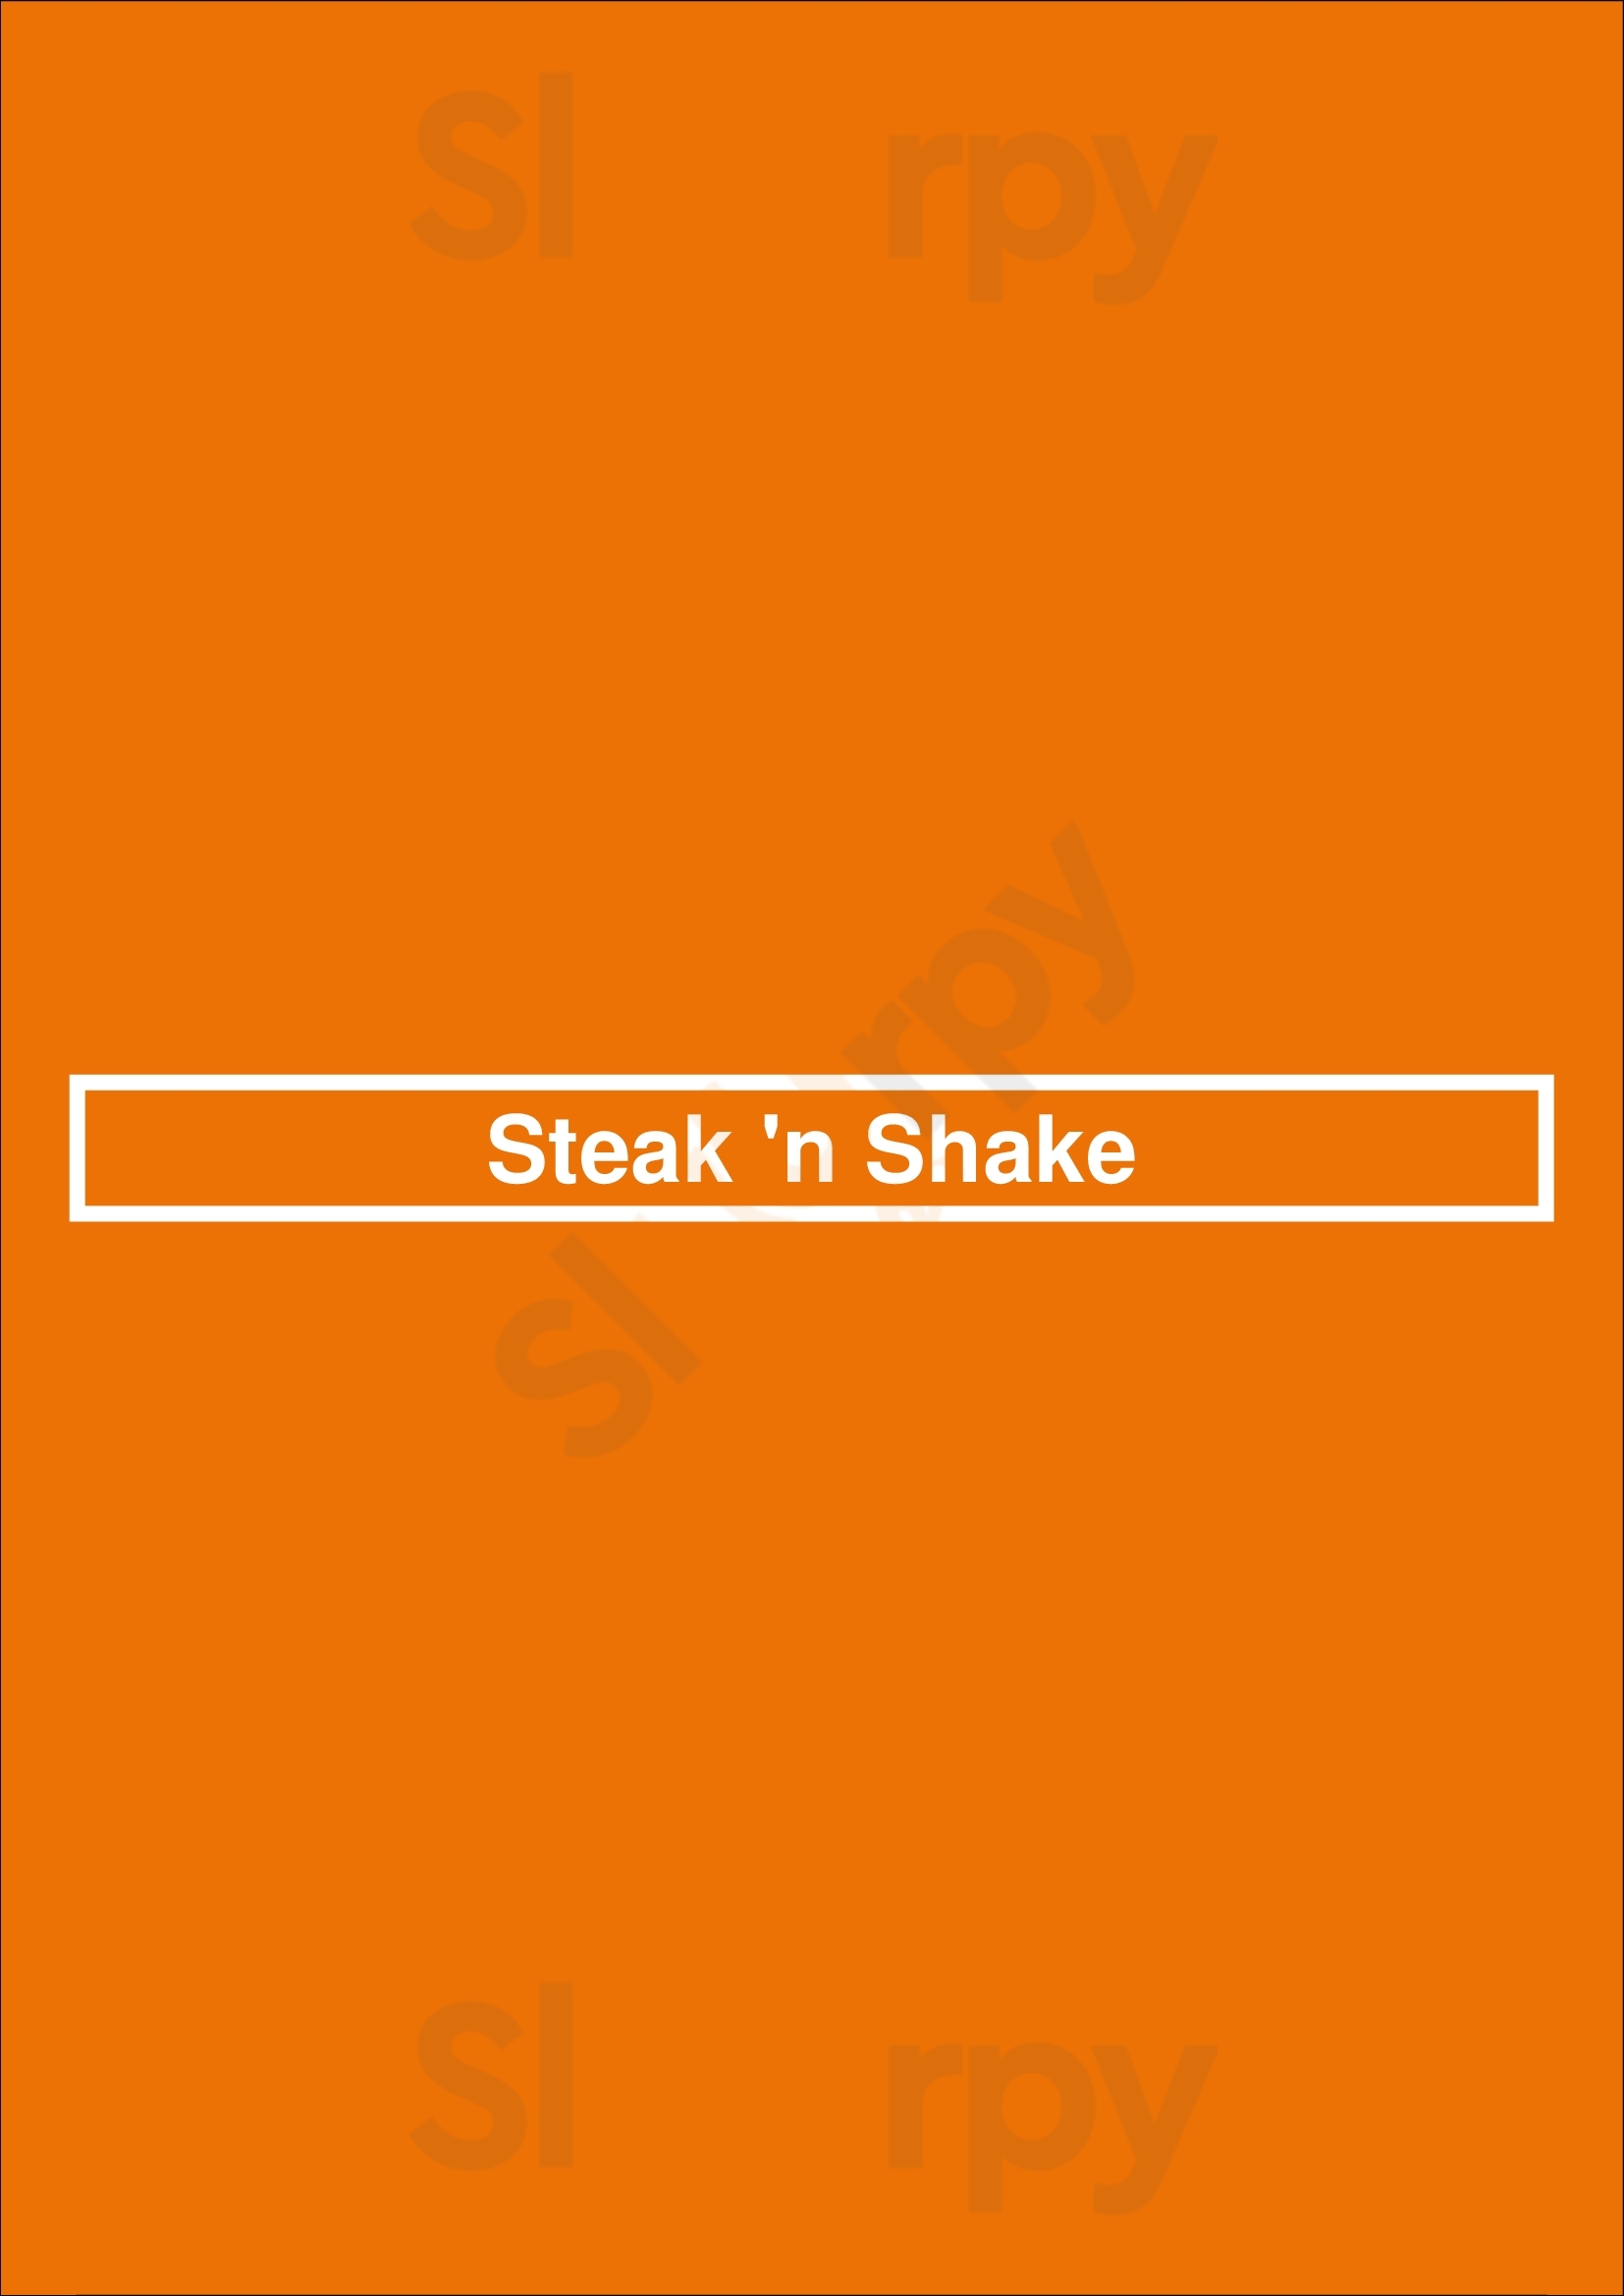 Steak 'n Shake Portage Menu - 1